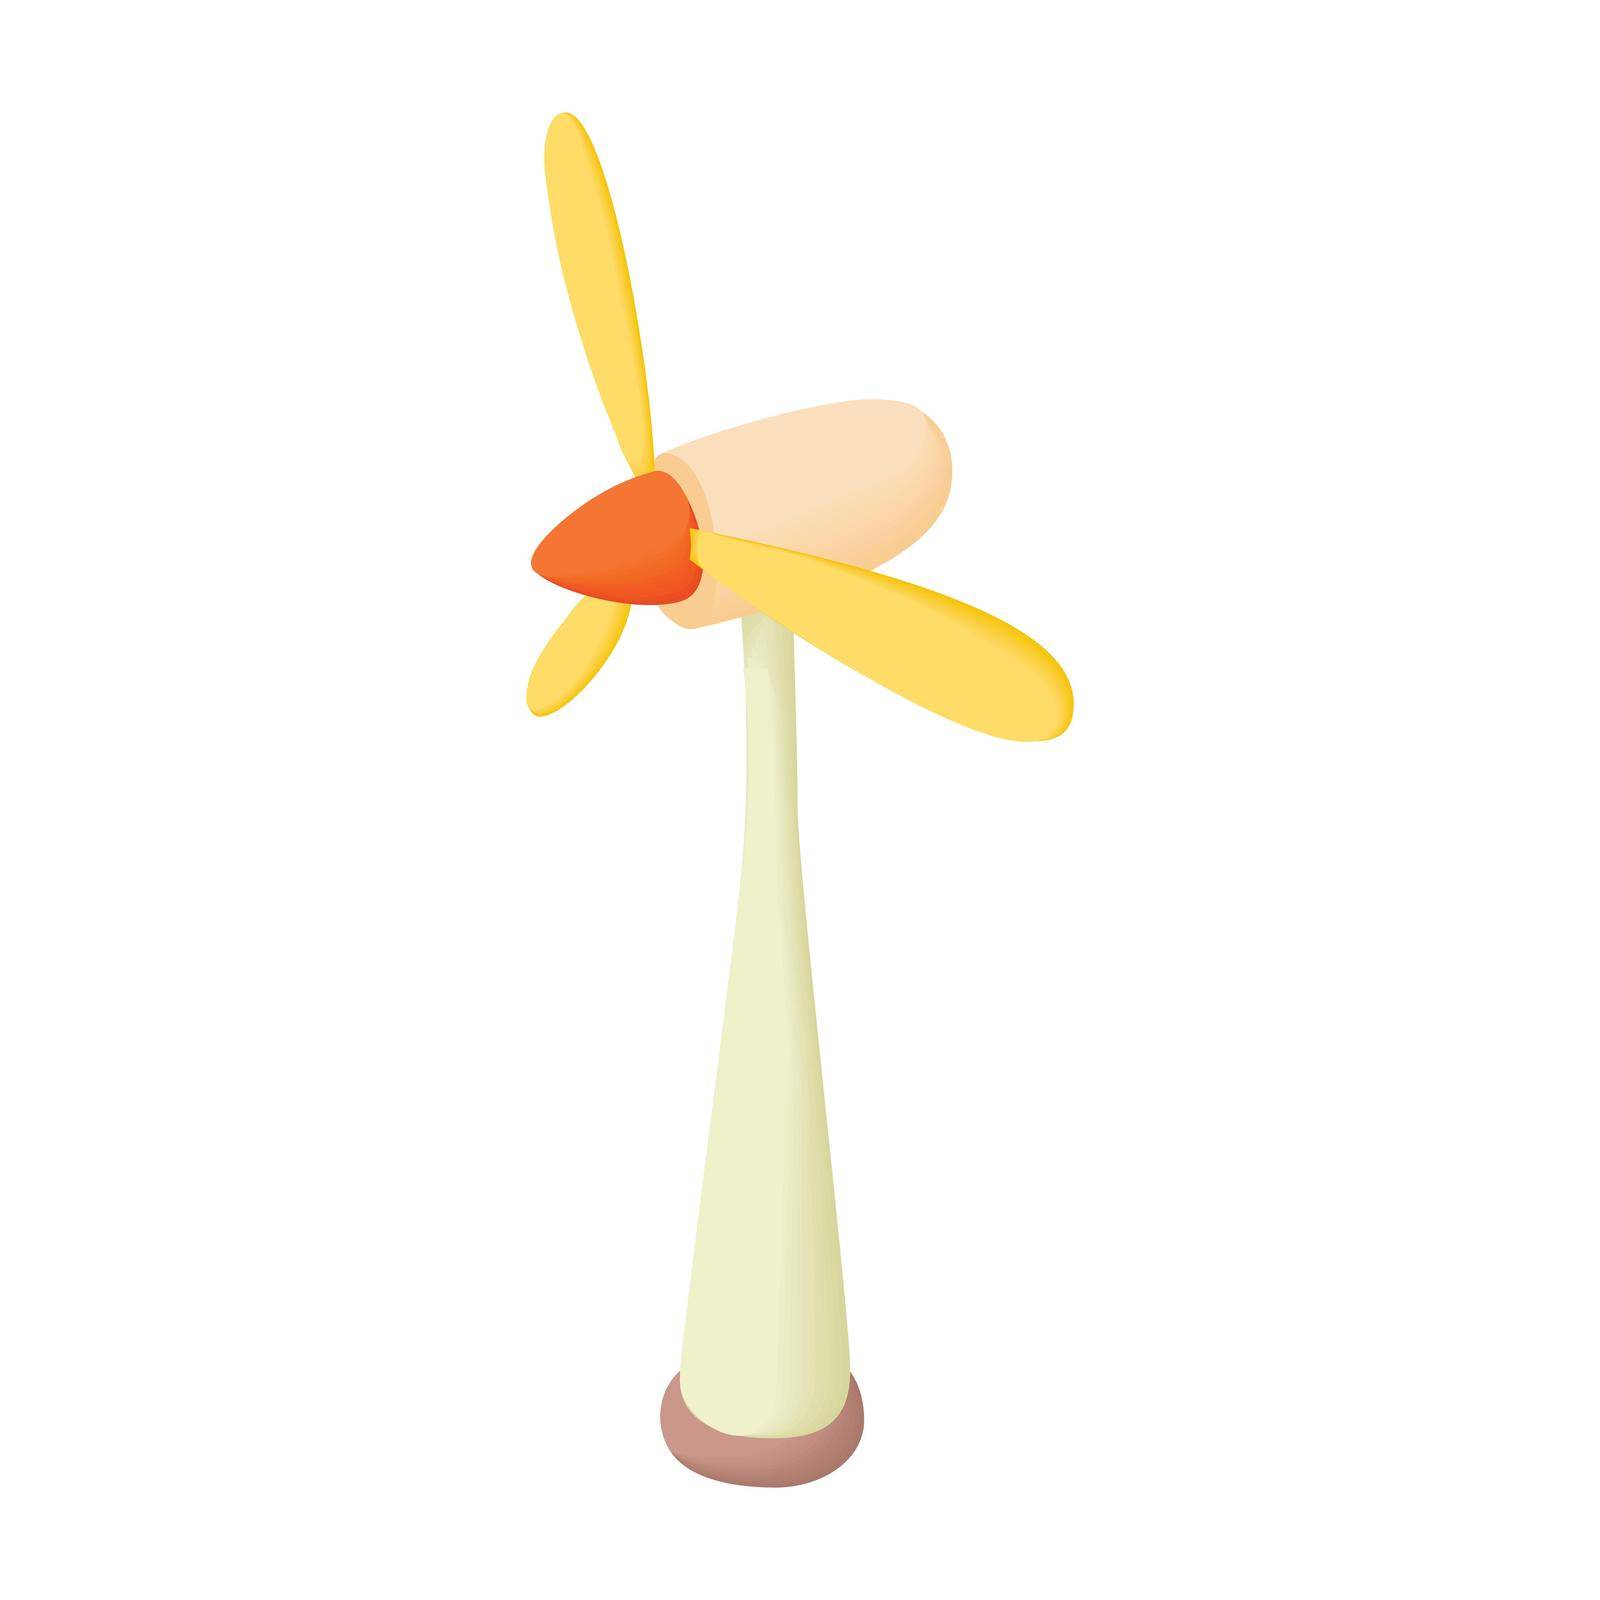 Wind turbine icon in cartoon style isolated on white background. Energy symbol